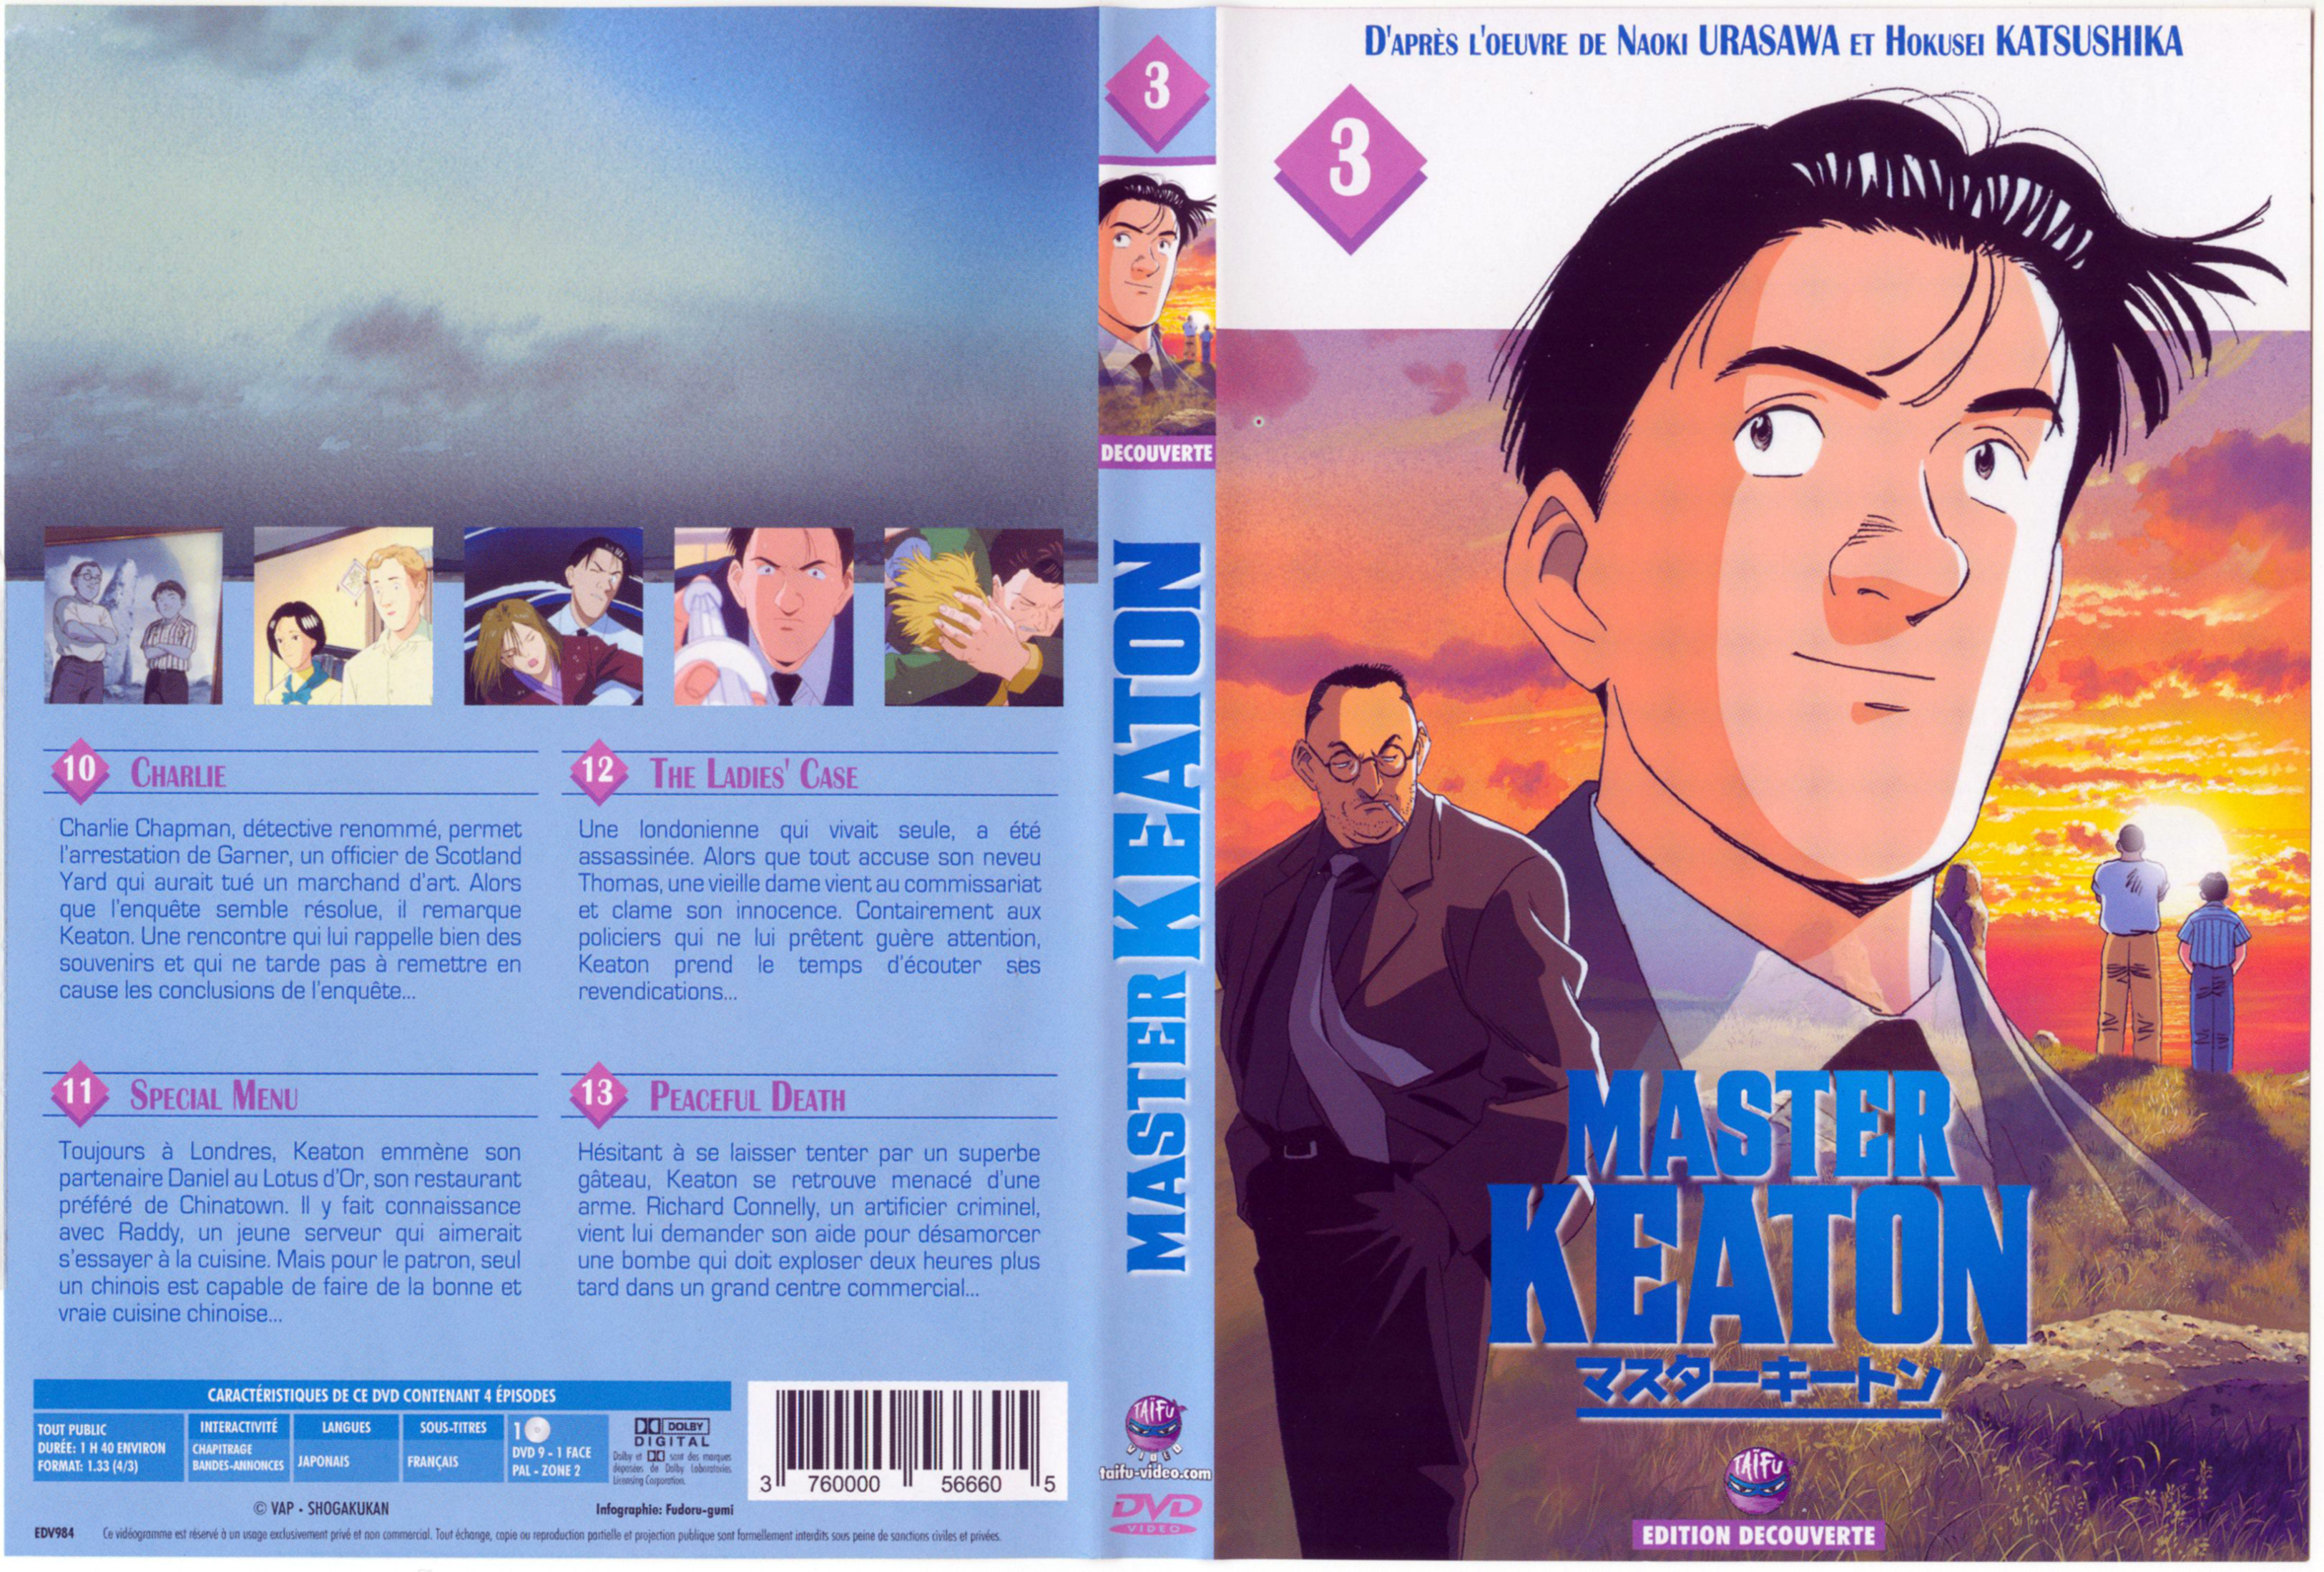 Jaquette DVD Master Keaton vol 03